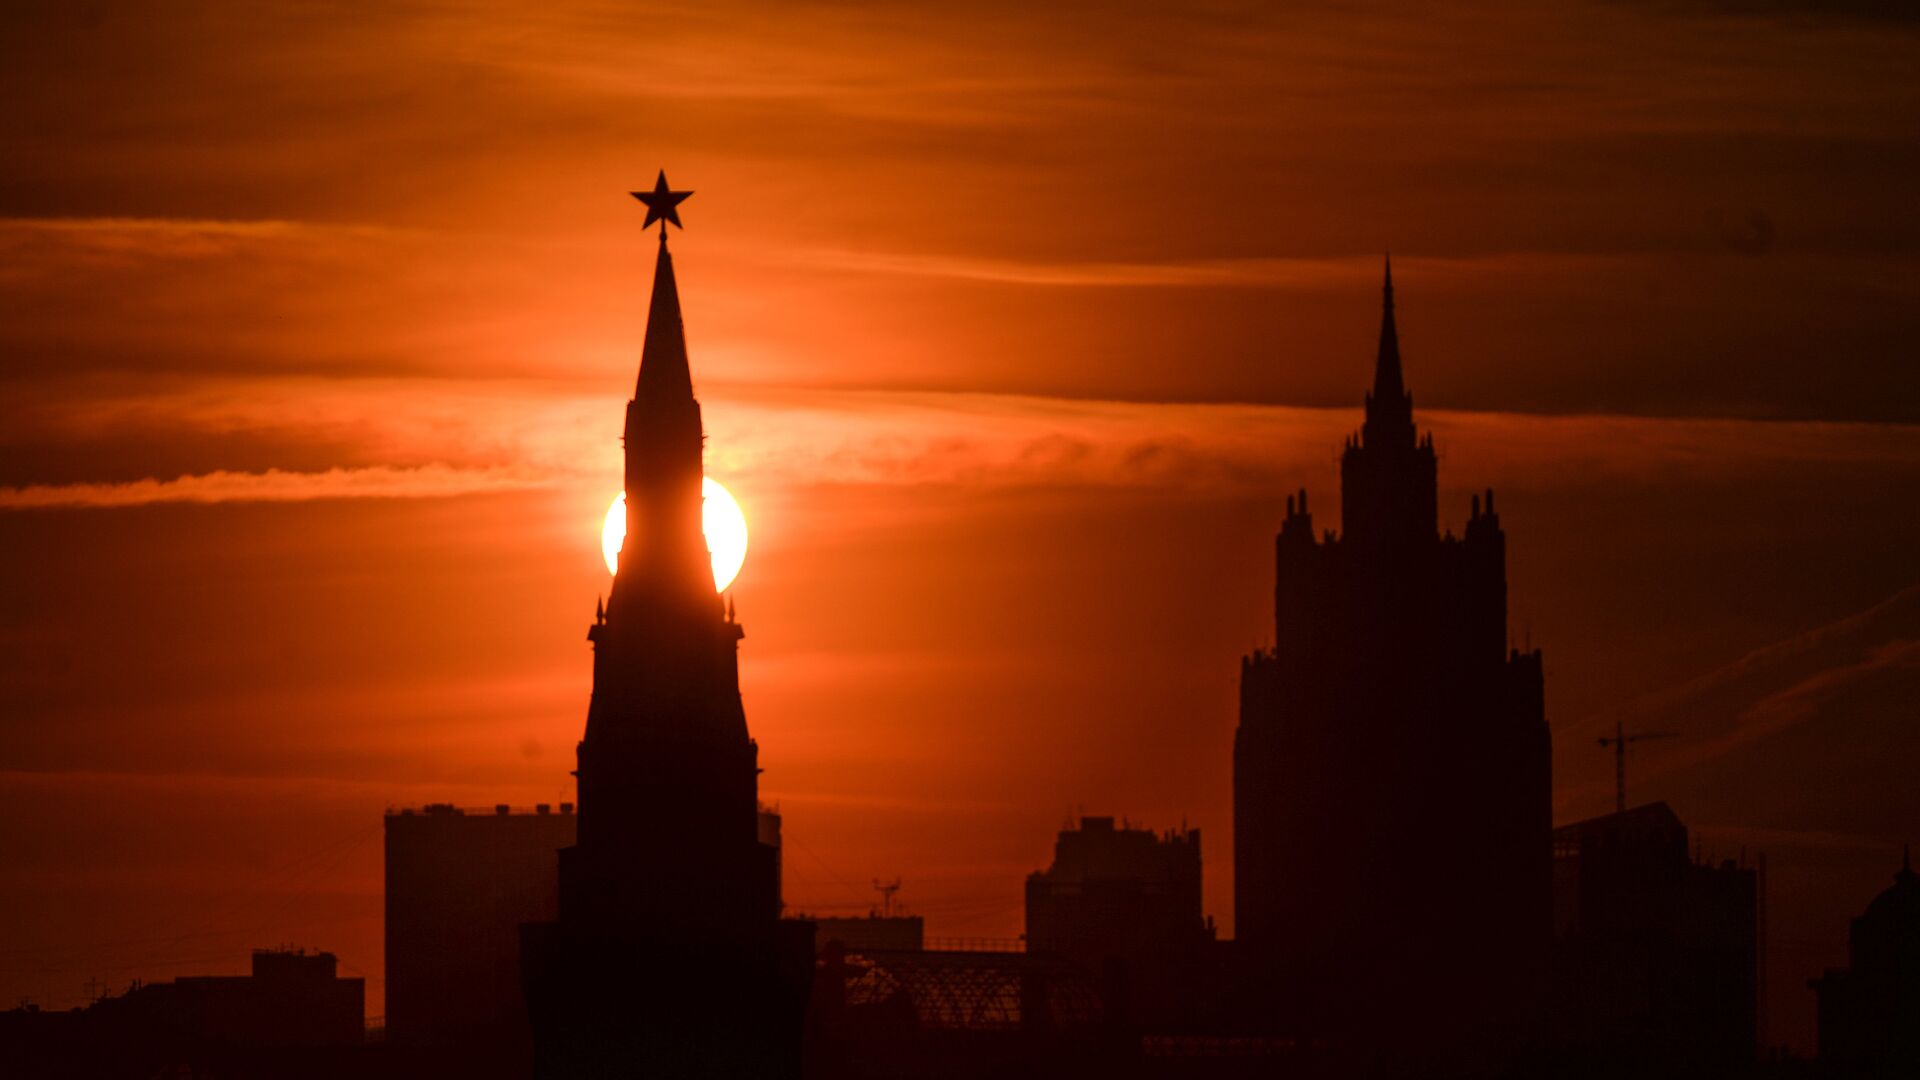  One of the Kremlin towers in Moscow - Sputnik International, 1920, 16.07.2021